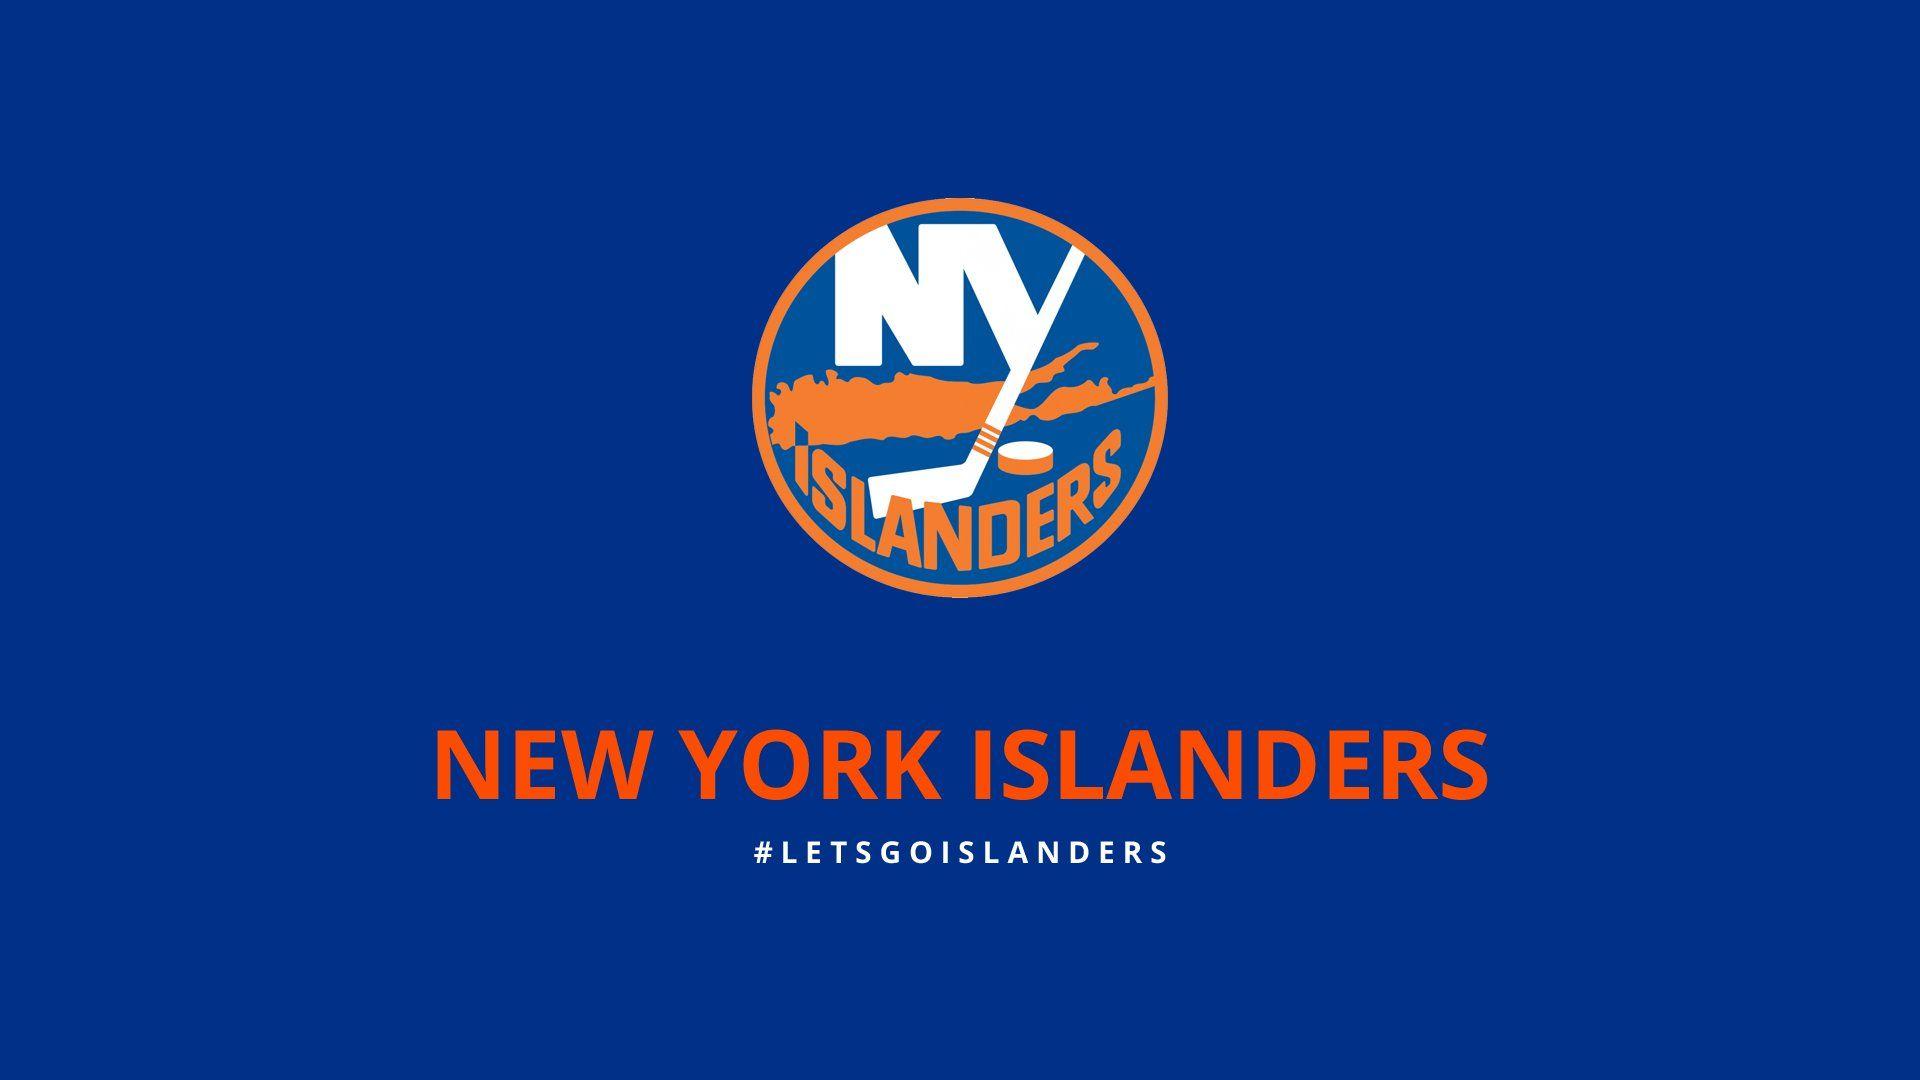 Download wallpapers New York Islanders hockey club NHL emblem logo  National Hockey League hockey New York  New york islanders Nhl  National hockey league